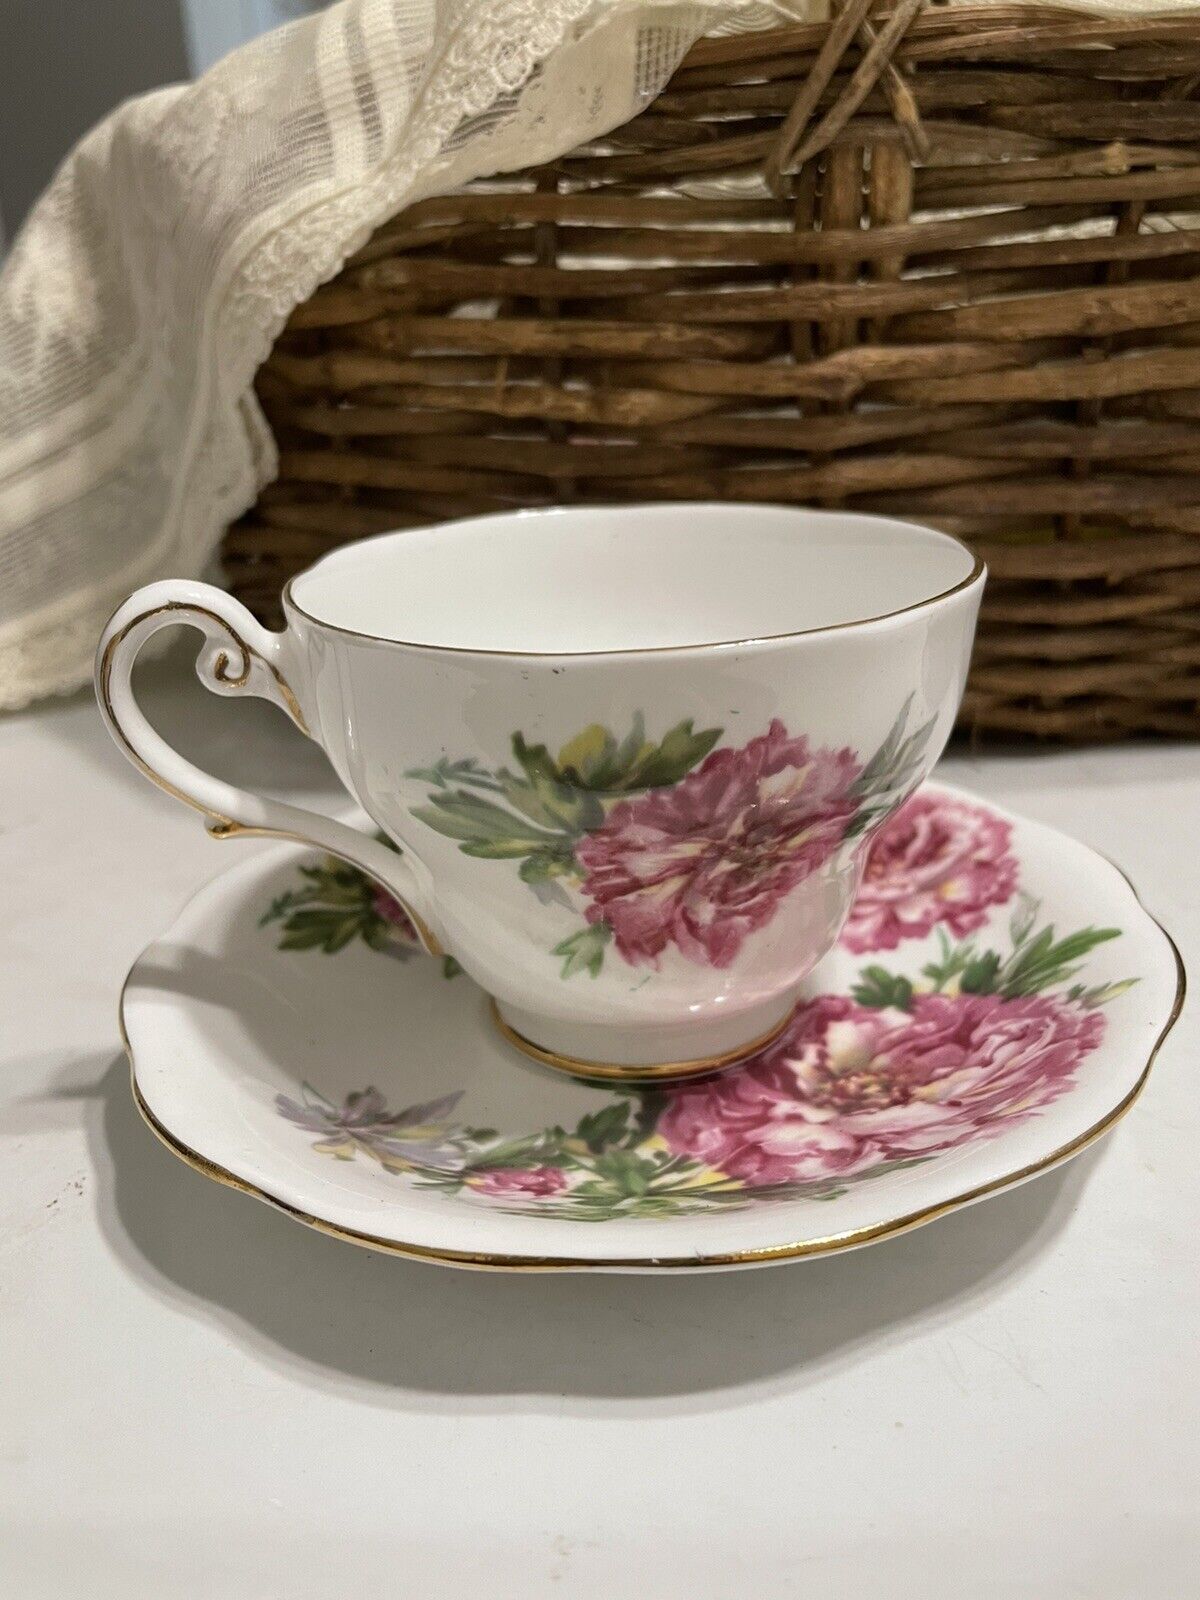 Vintage Teacup And Saucer: Royal Standard, England. Amethyst.